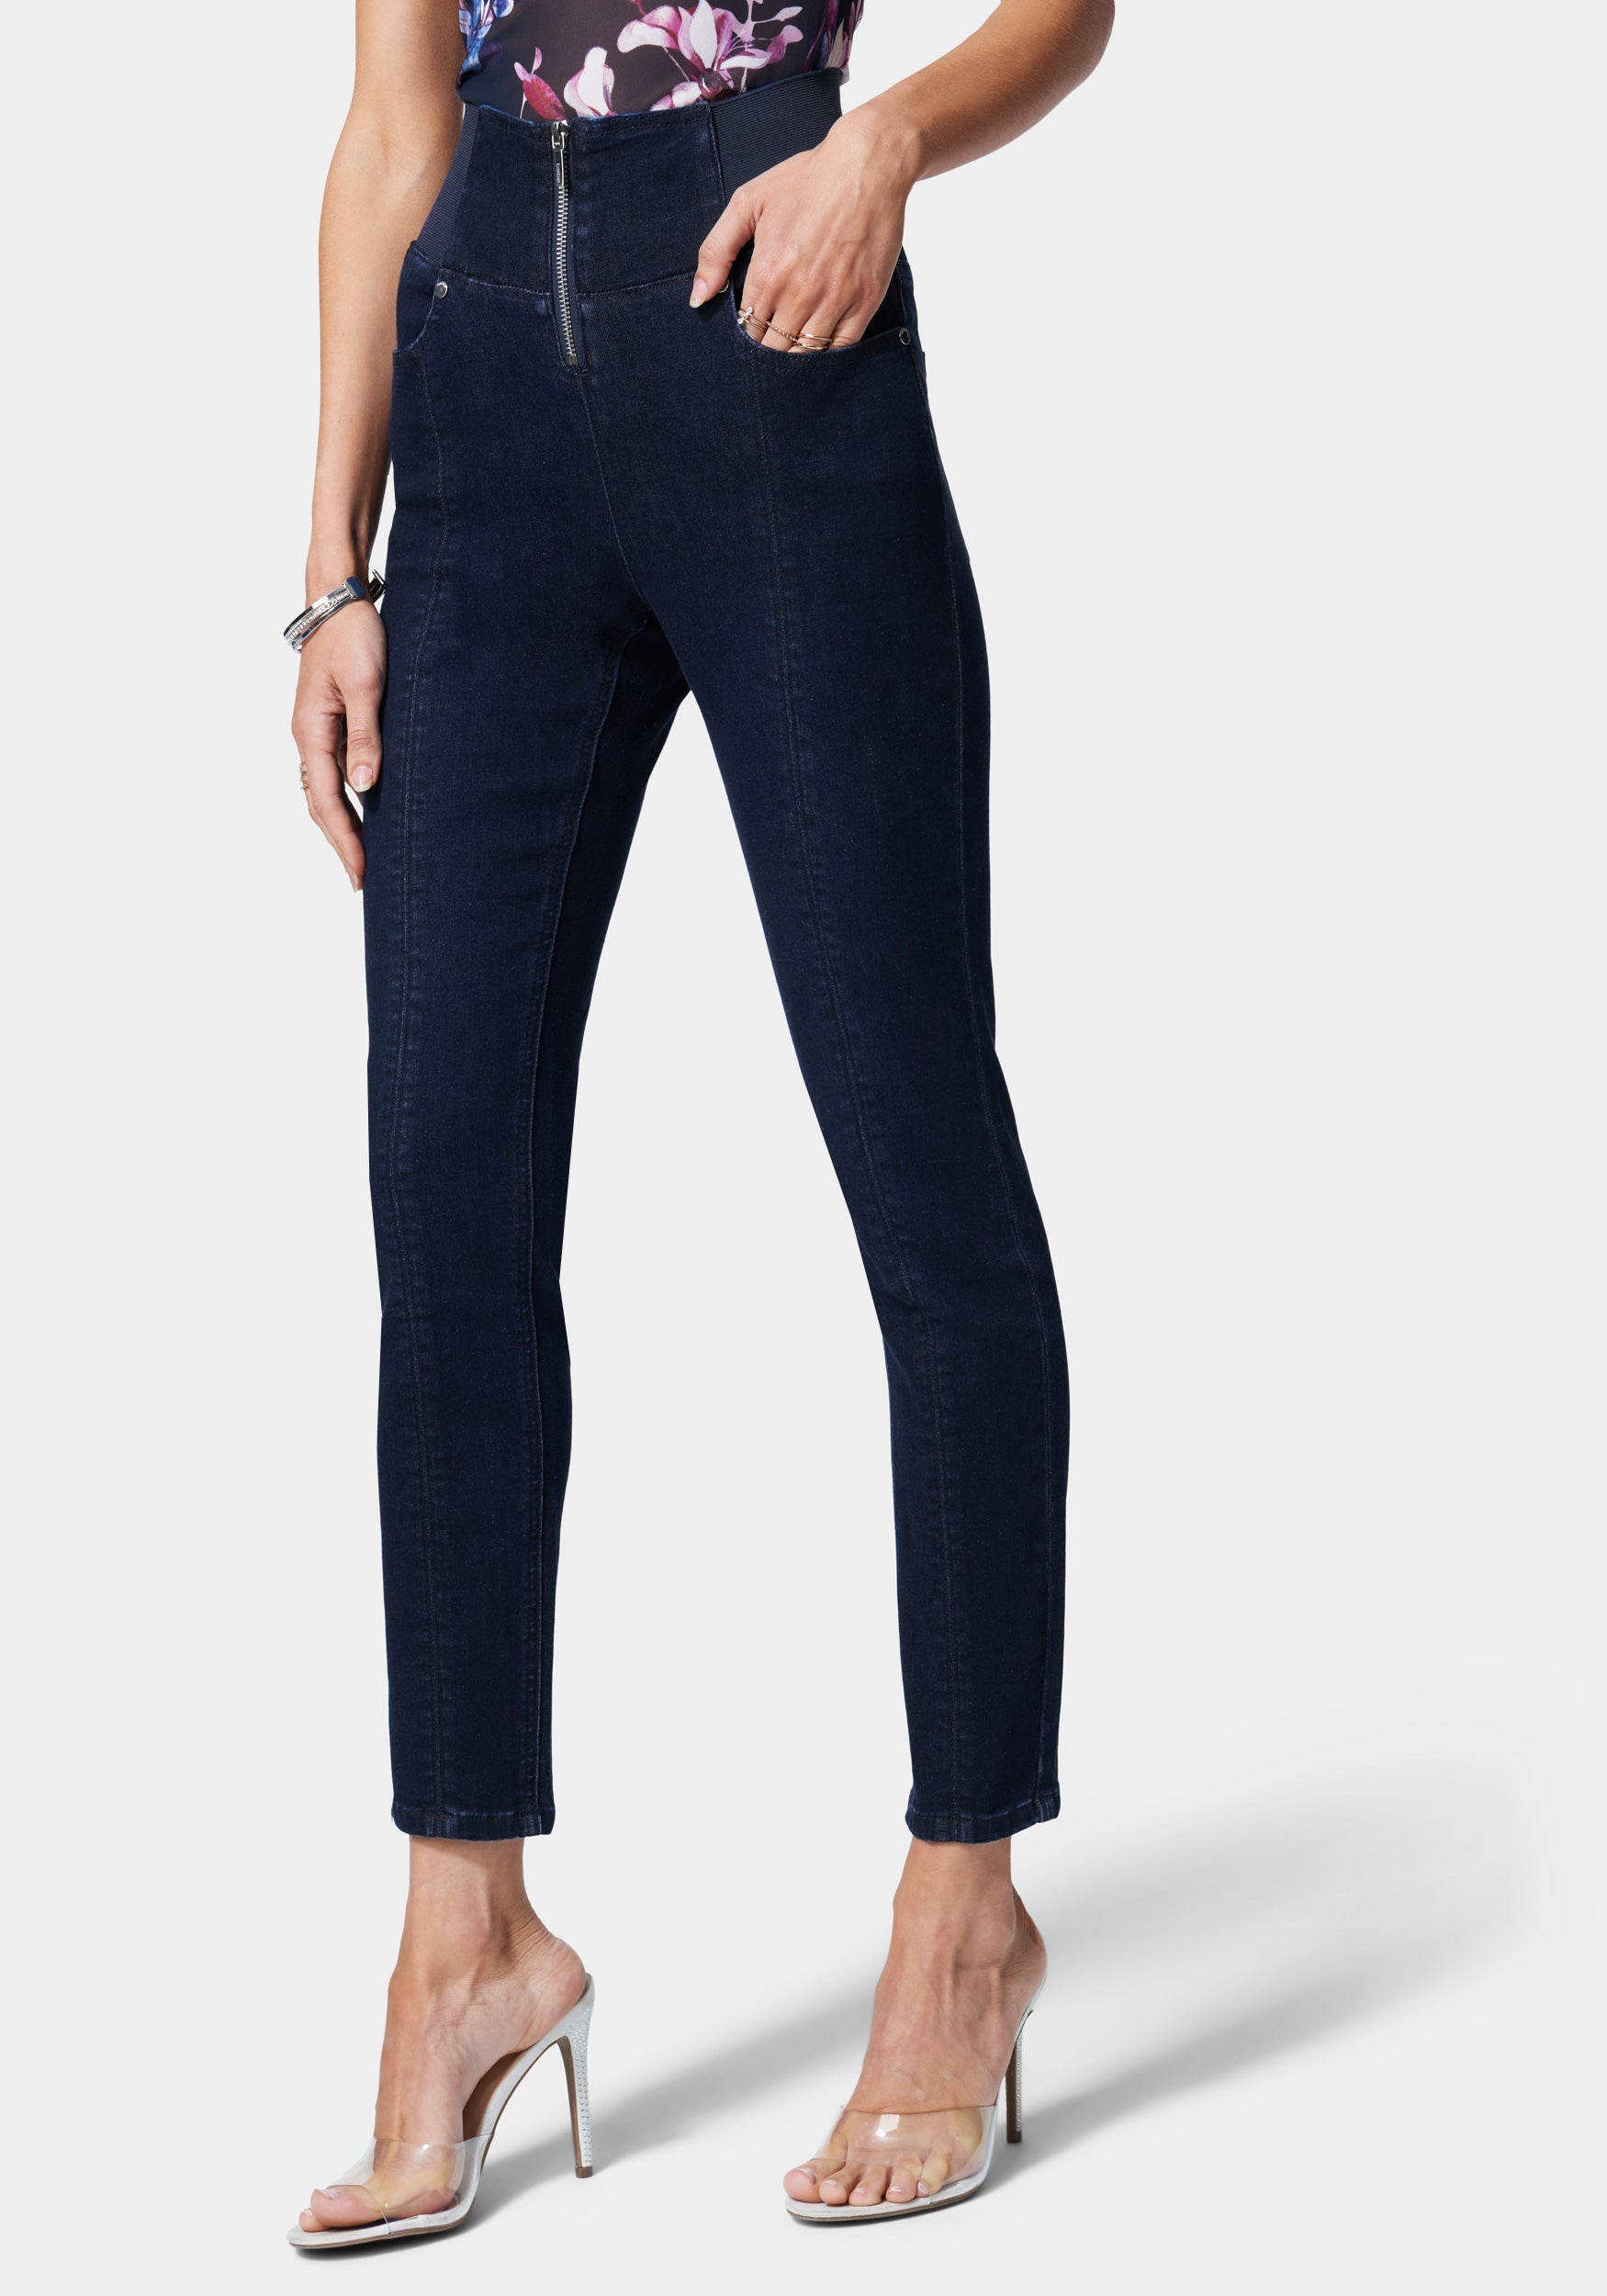  -Zip Front Elastic Skinny Jean